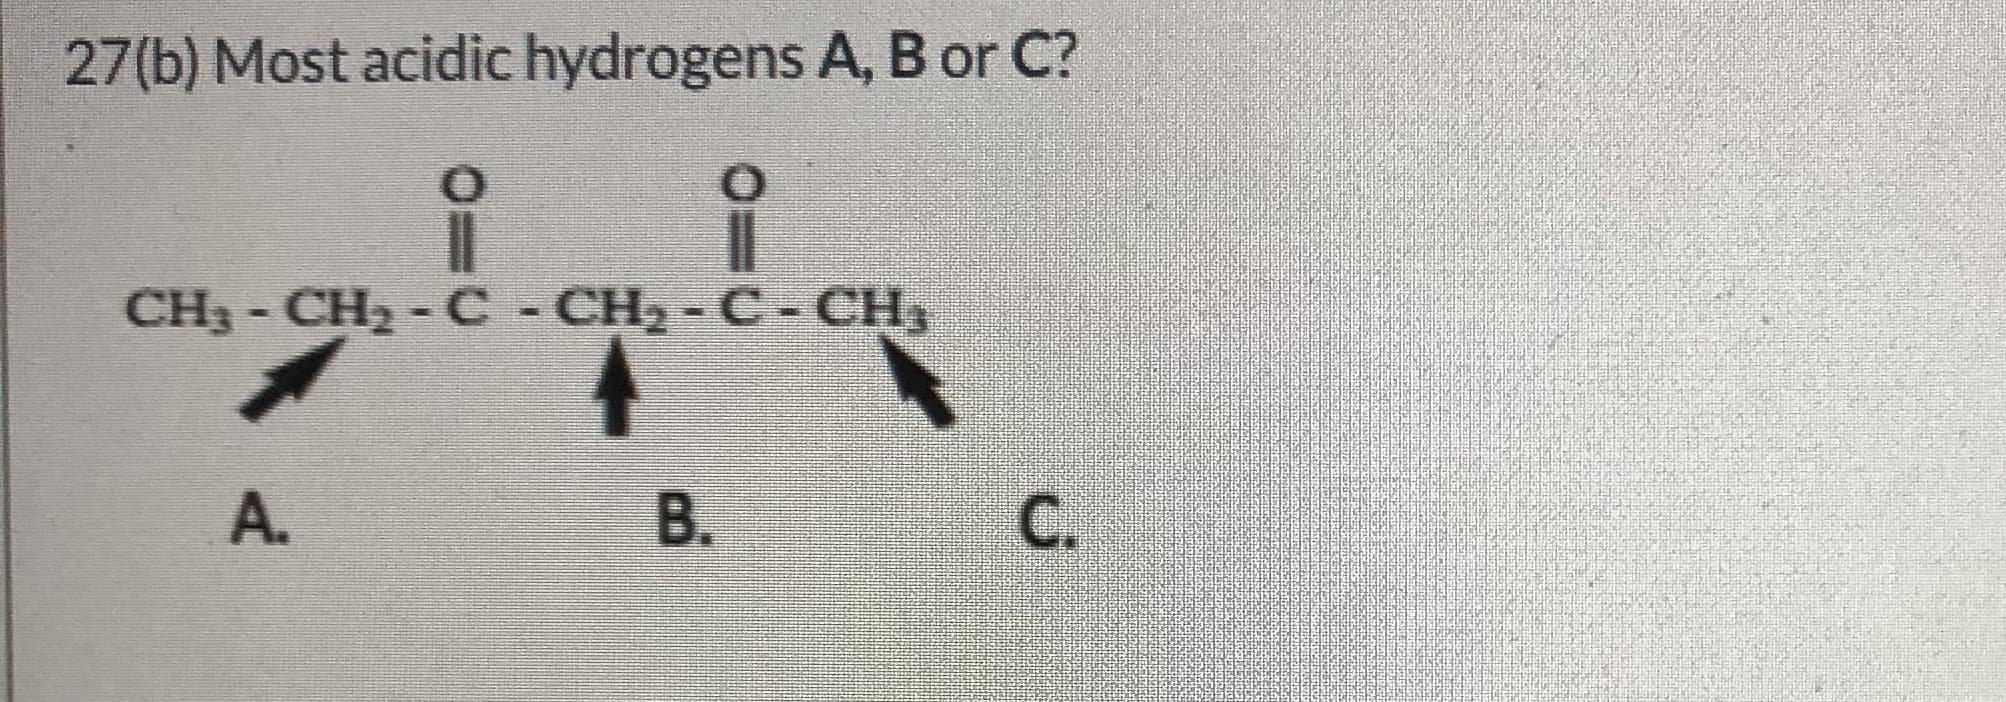 27(b) Most acidic hydrogens A, B or C?
CH3- CH2 - C - CH2 - C- CH3
A.
В.
C.
